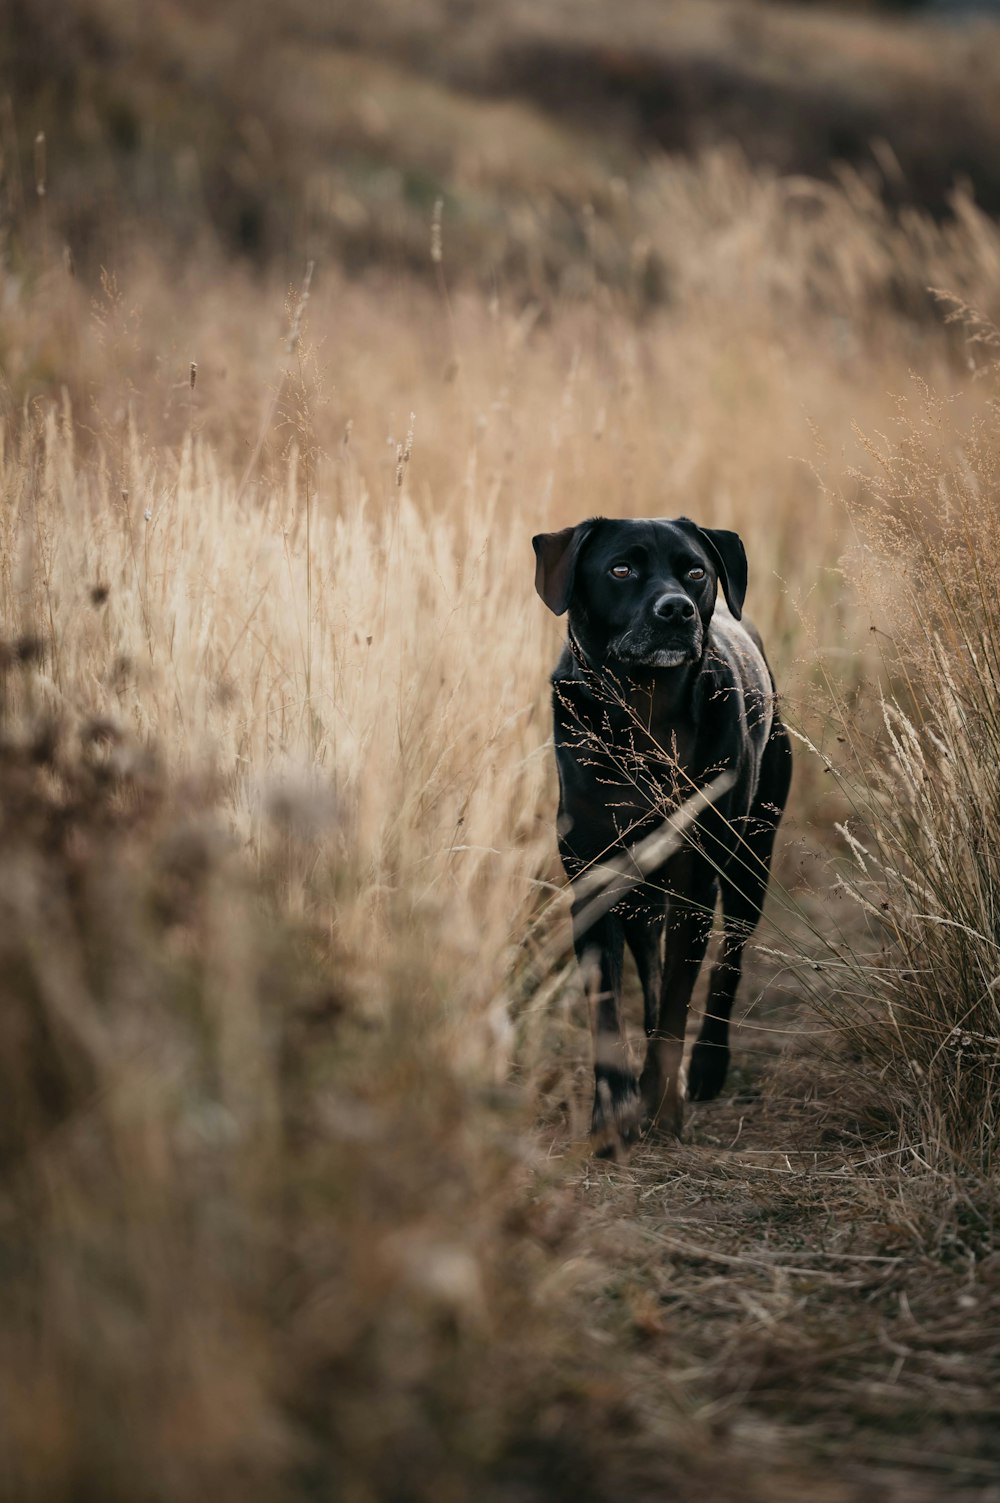 a black dog walking through a dry grass field